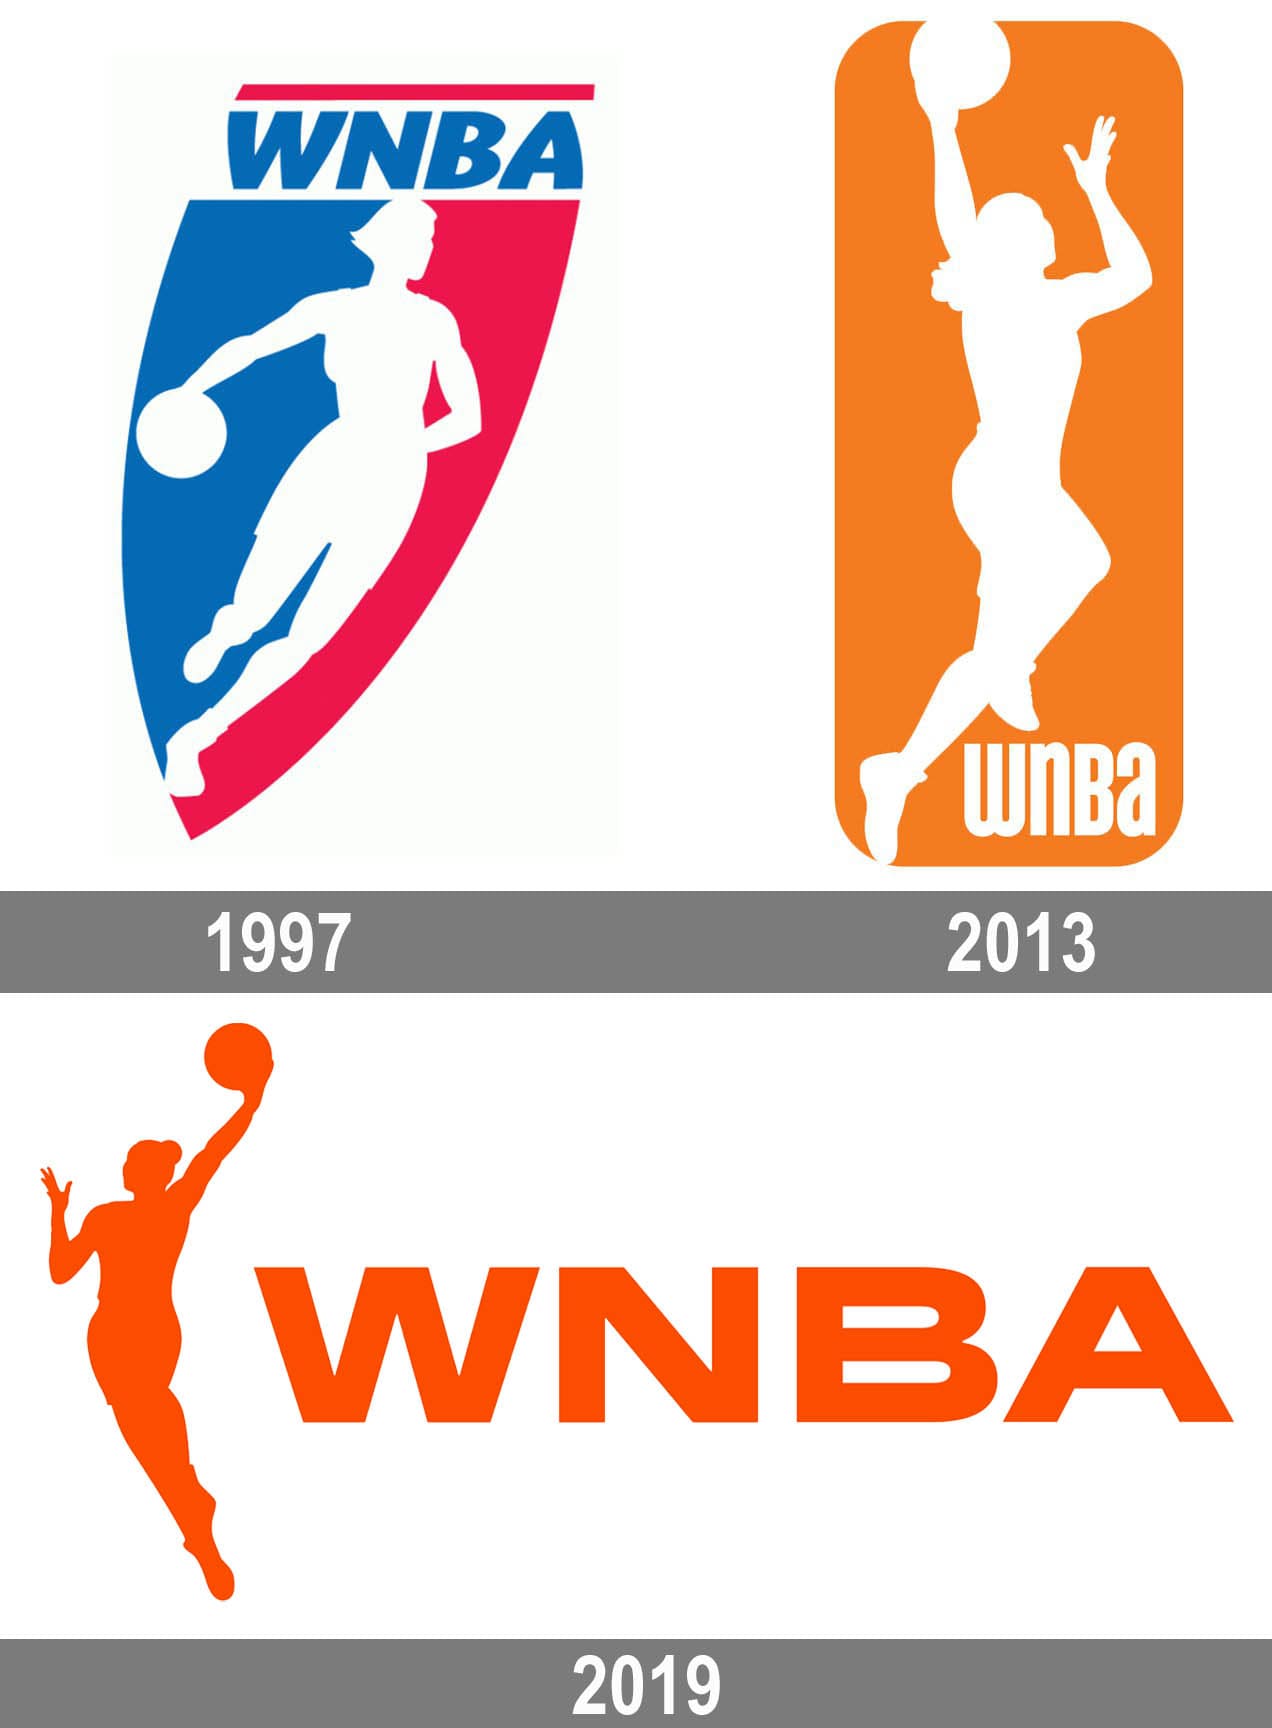 Details 32 quien es el logo de la wnba - Abzlocal.mx